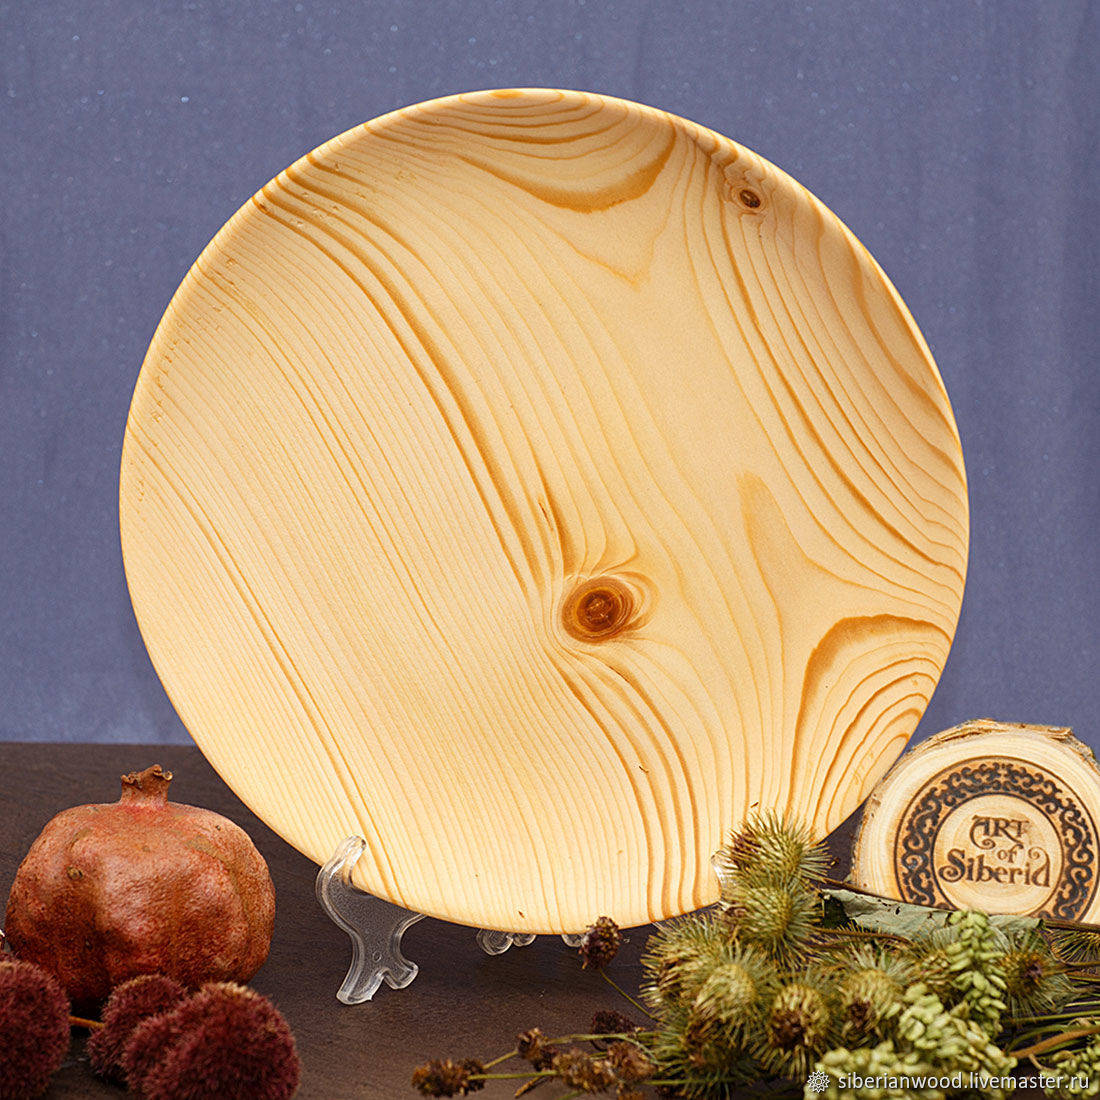 Wooden ru. Деревянная тарелка. Тарелки из дерева. Необычные тарелки из дерева. Деревянная тарелочка.